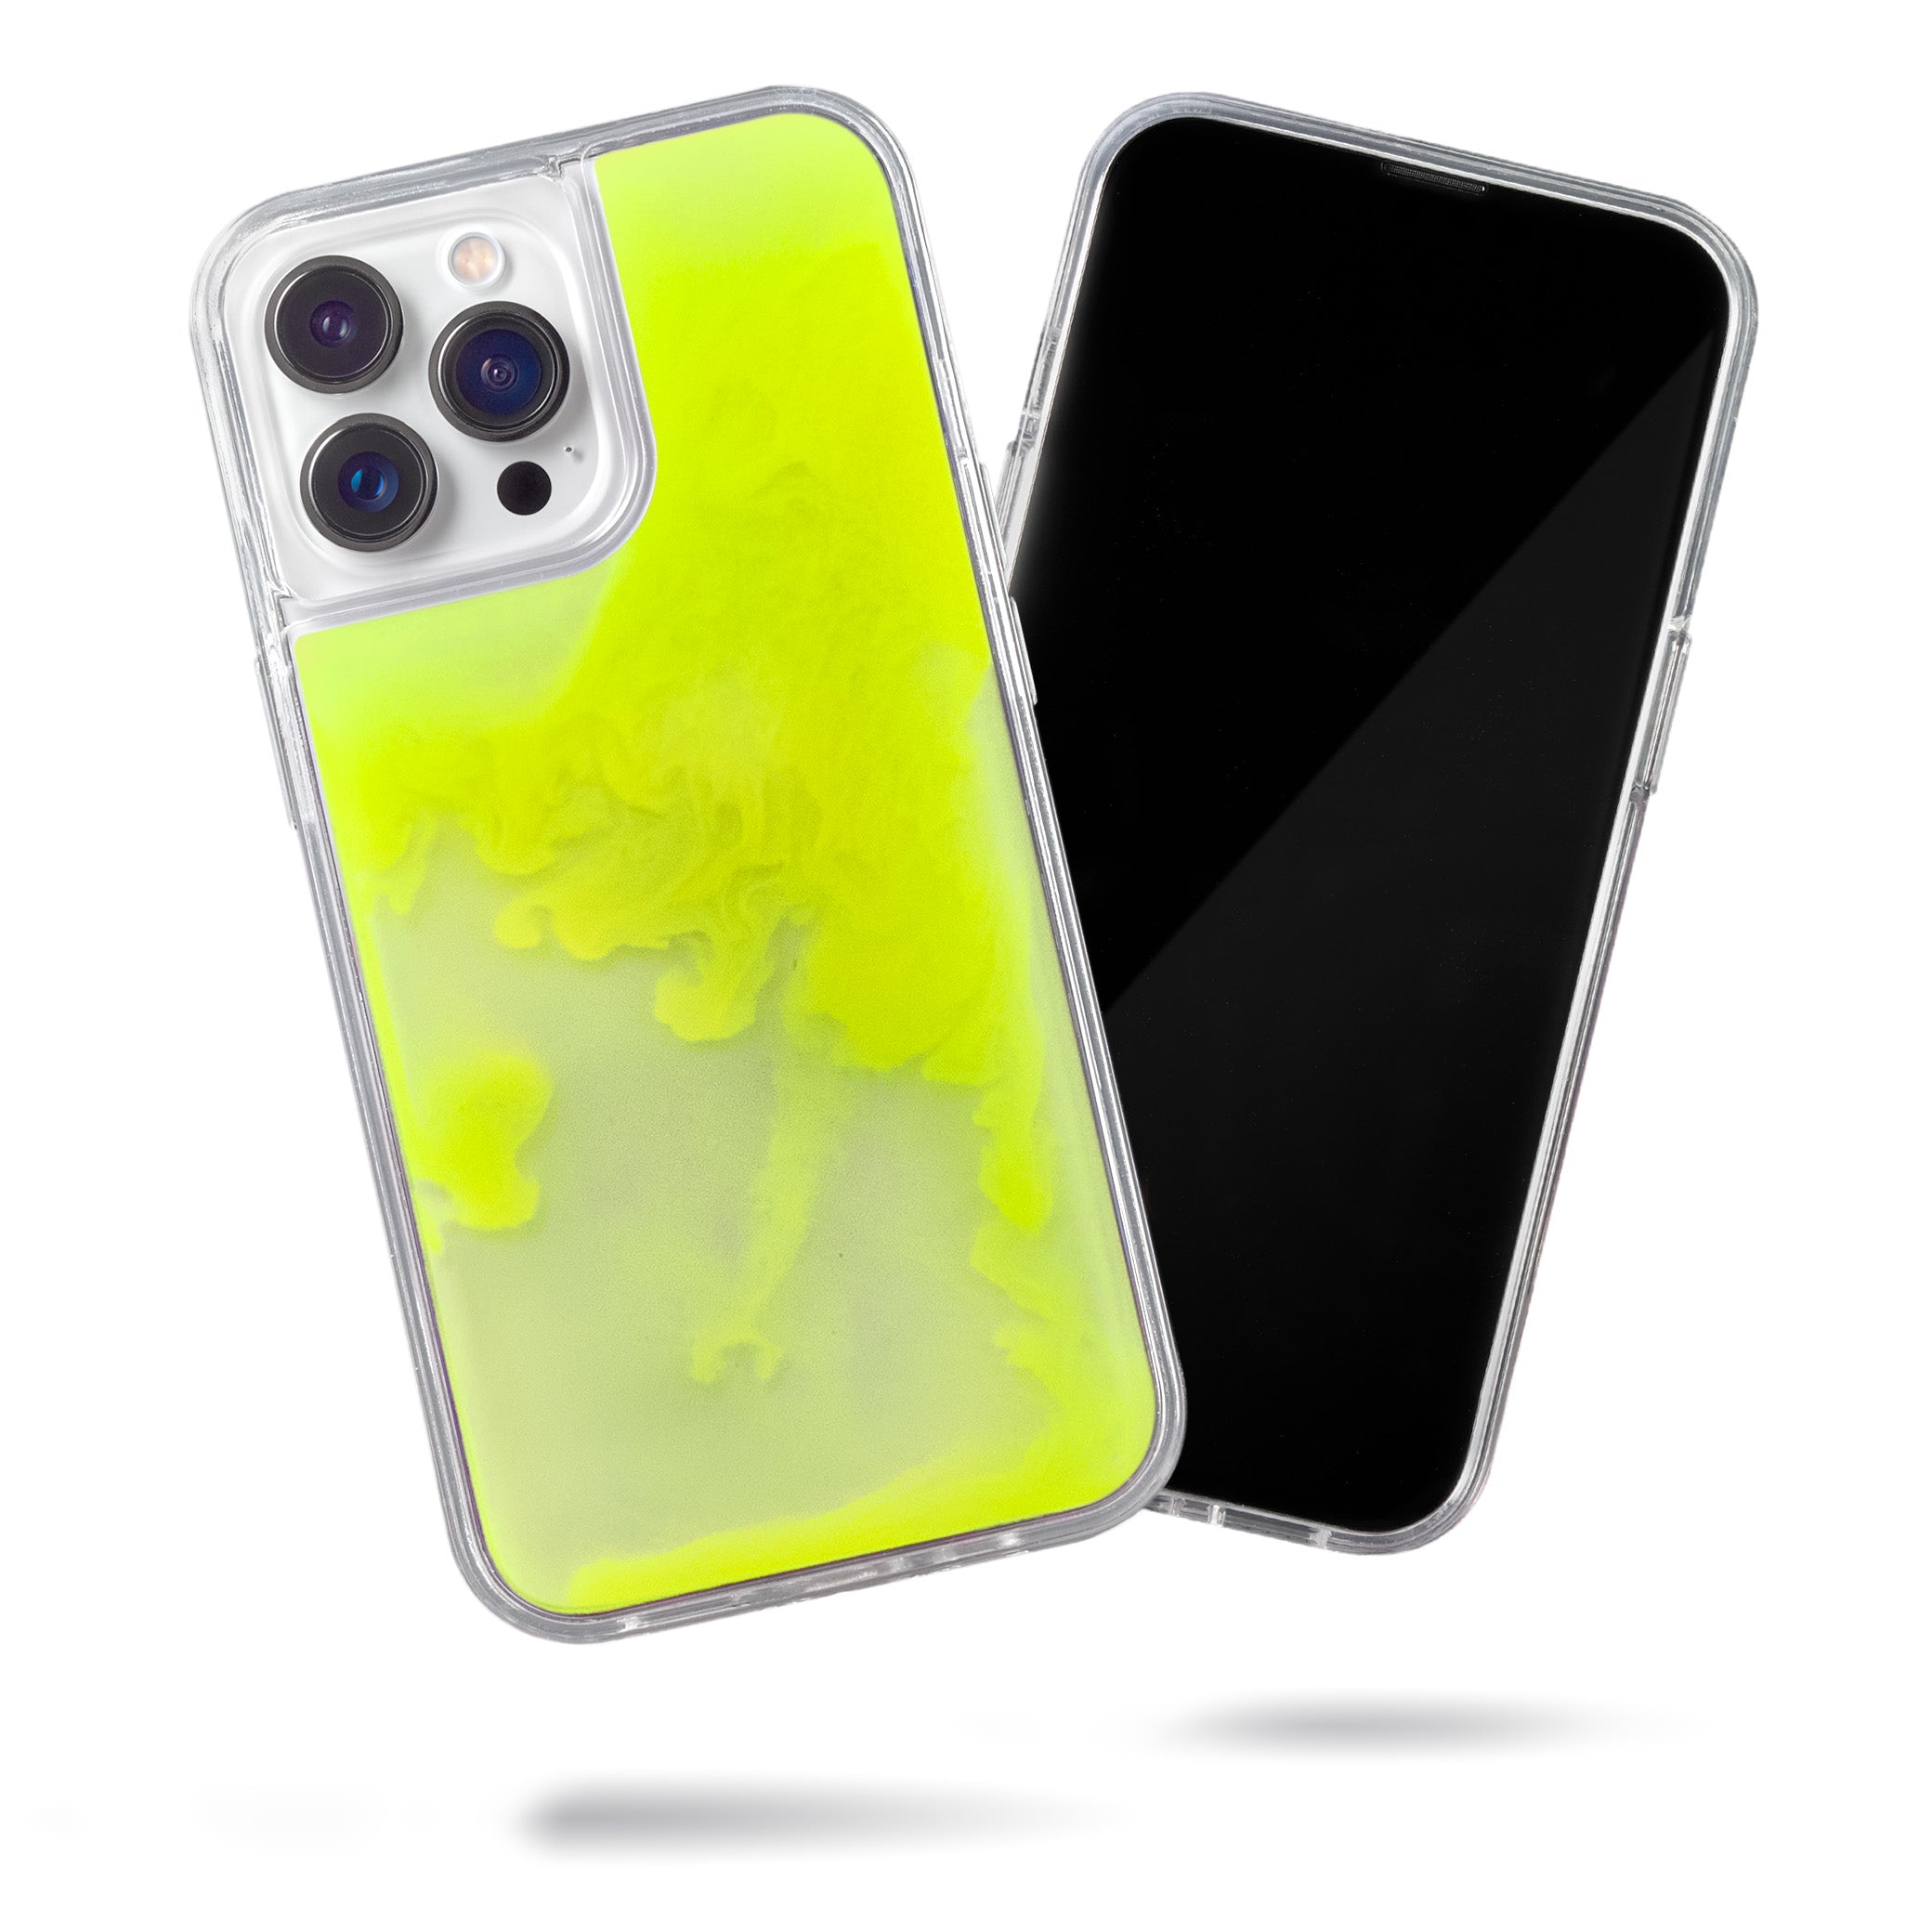 Neon Sand Case for iPhone 13 Pro Max - Neon-Yellow Lemonade